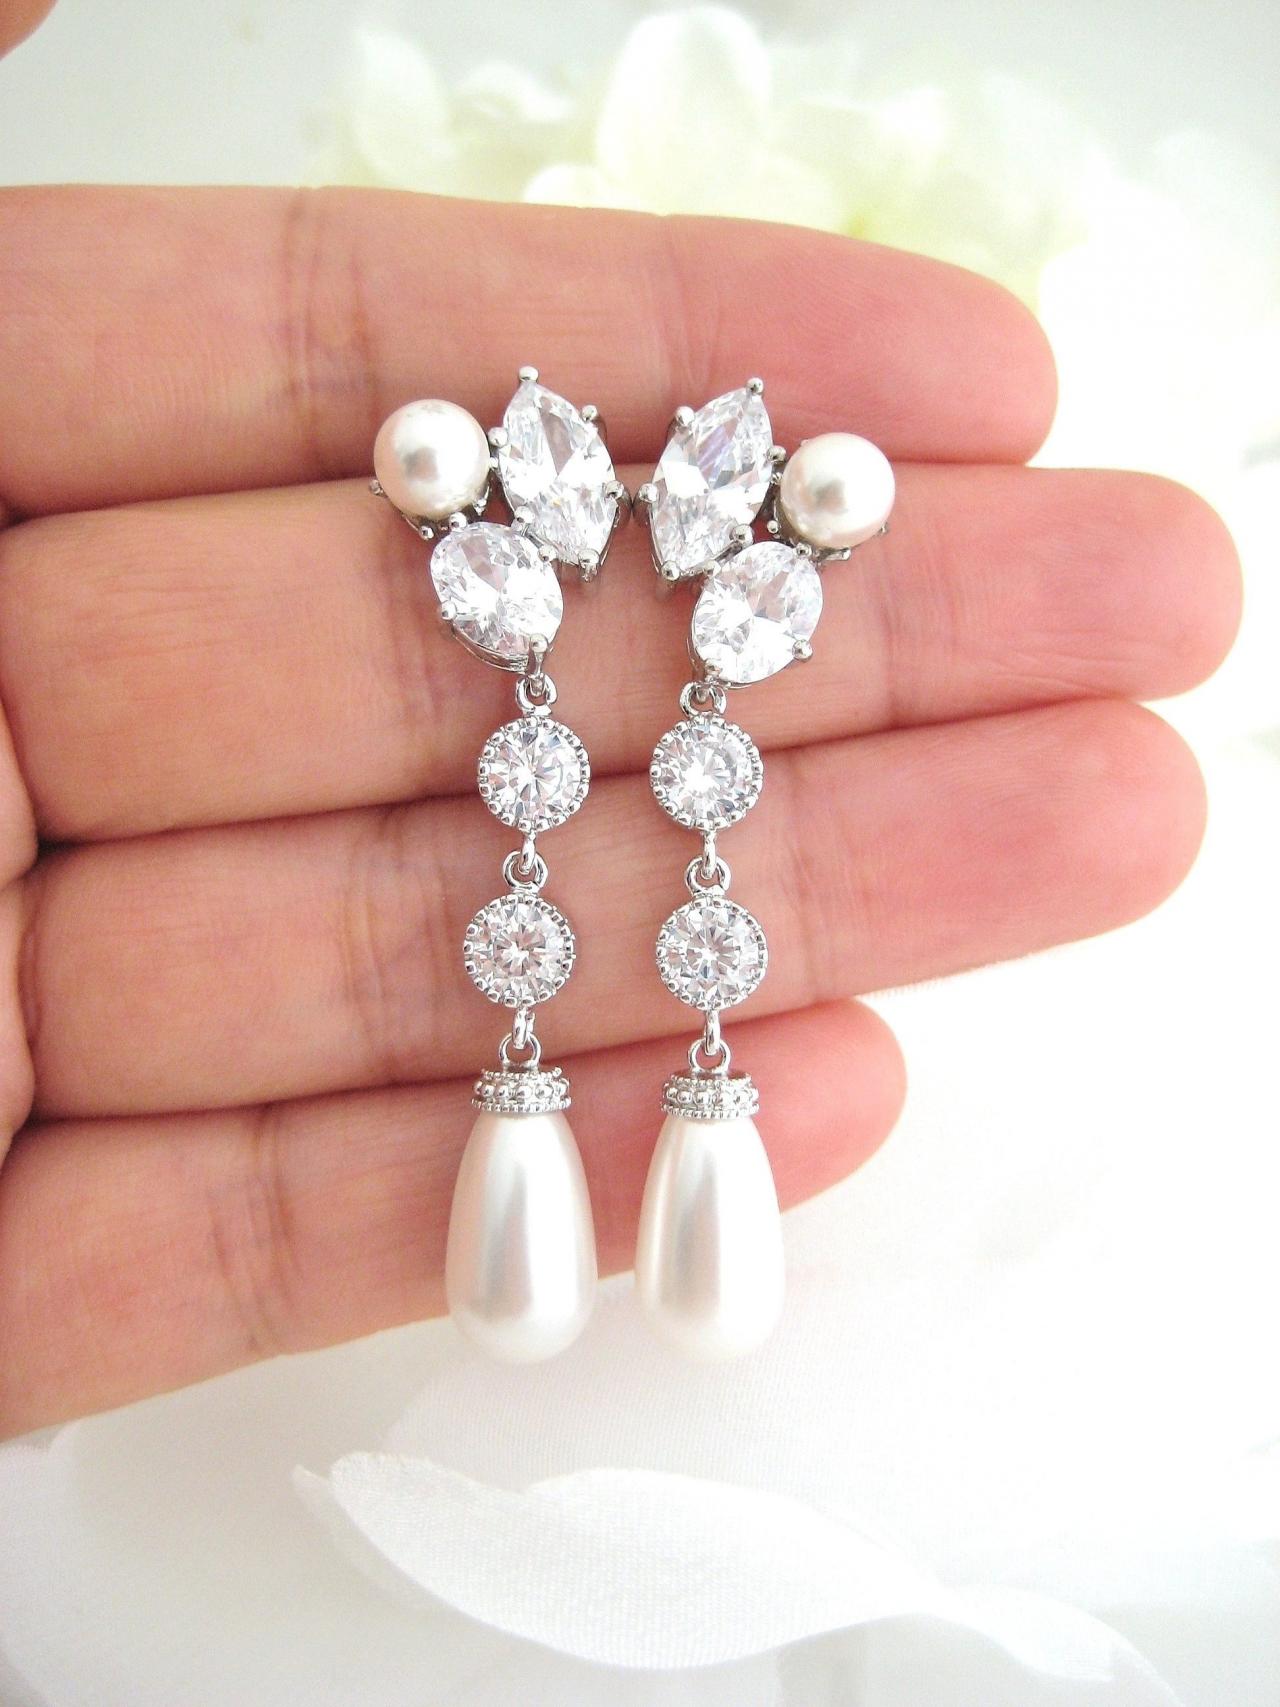 Bridal Teardrop Pearl Earrings Wedding Earrings Swarovski Pearl Earrings Bridesmaids Gift Crystal Cubic Zirconia Earrings (e313)